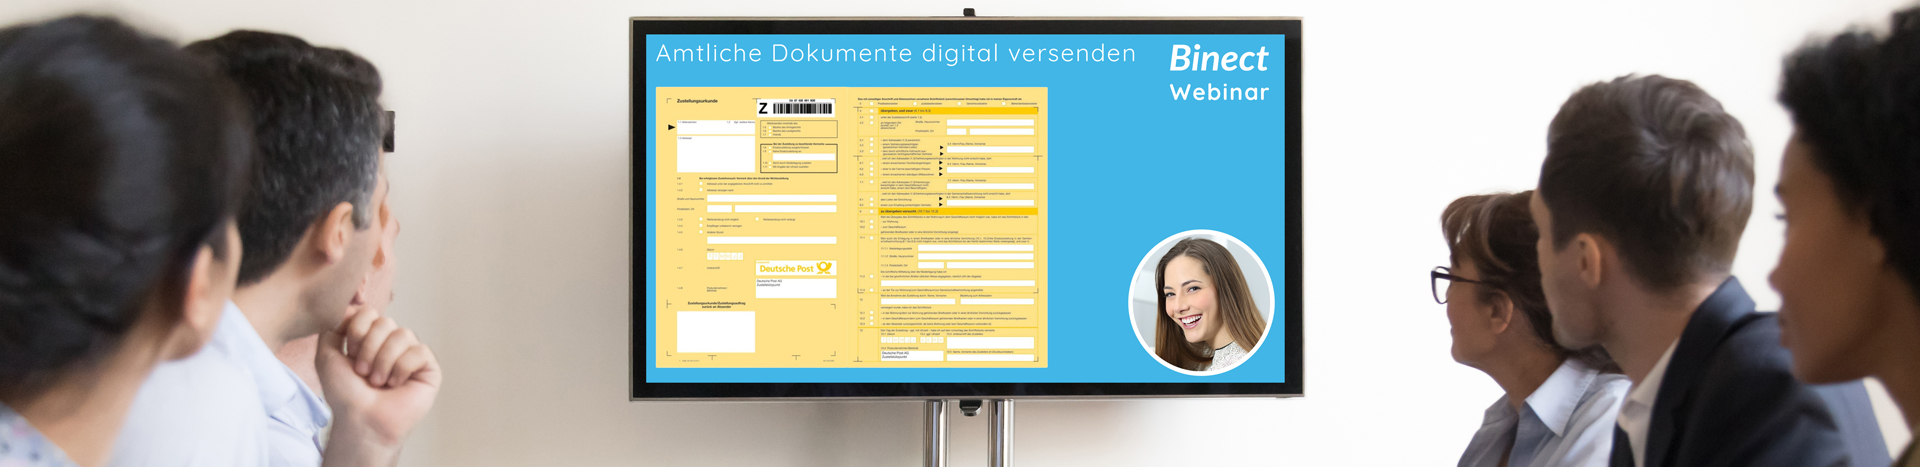 Binect Webinar: Amtliche Dokumente digital versenden